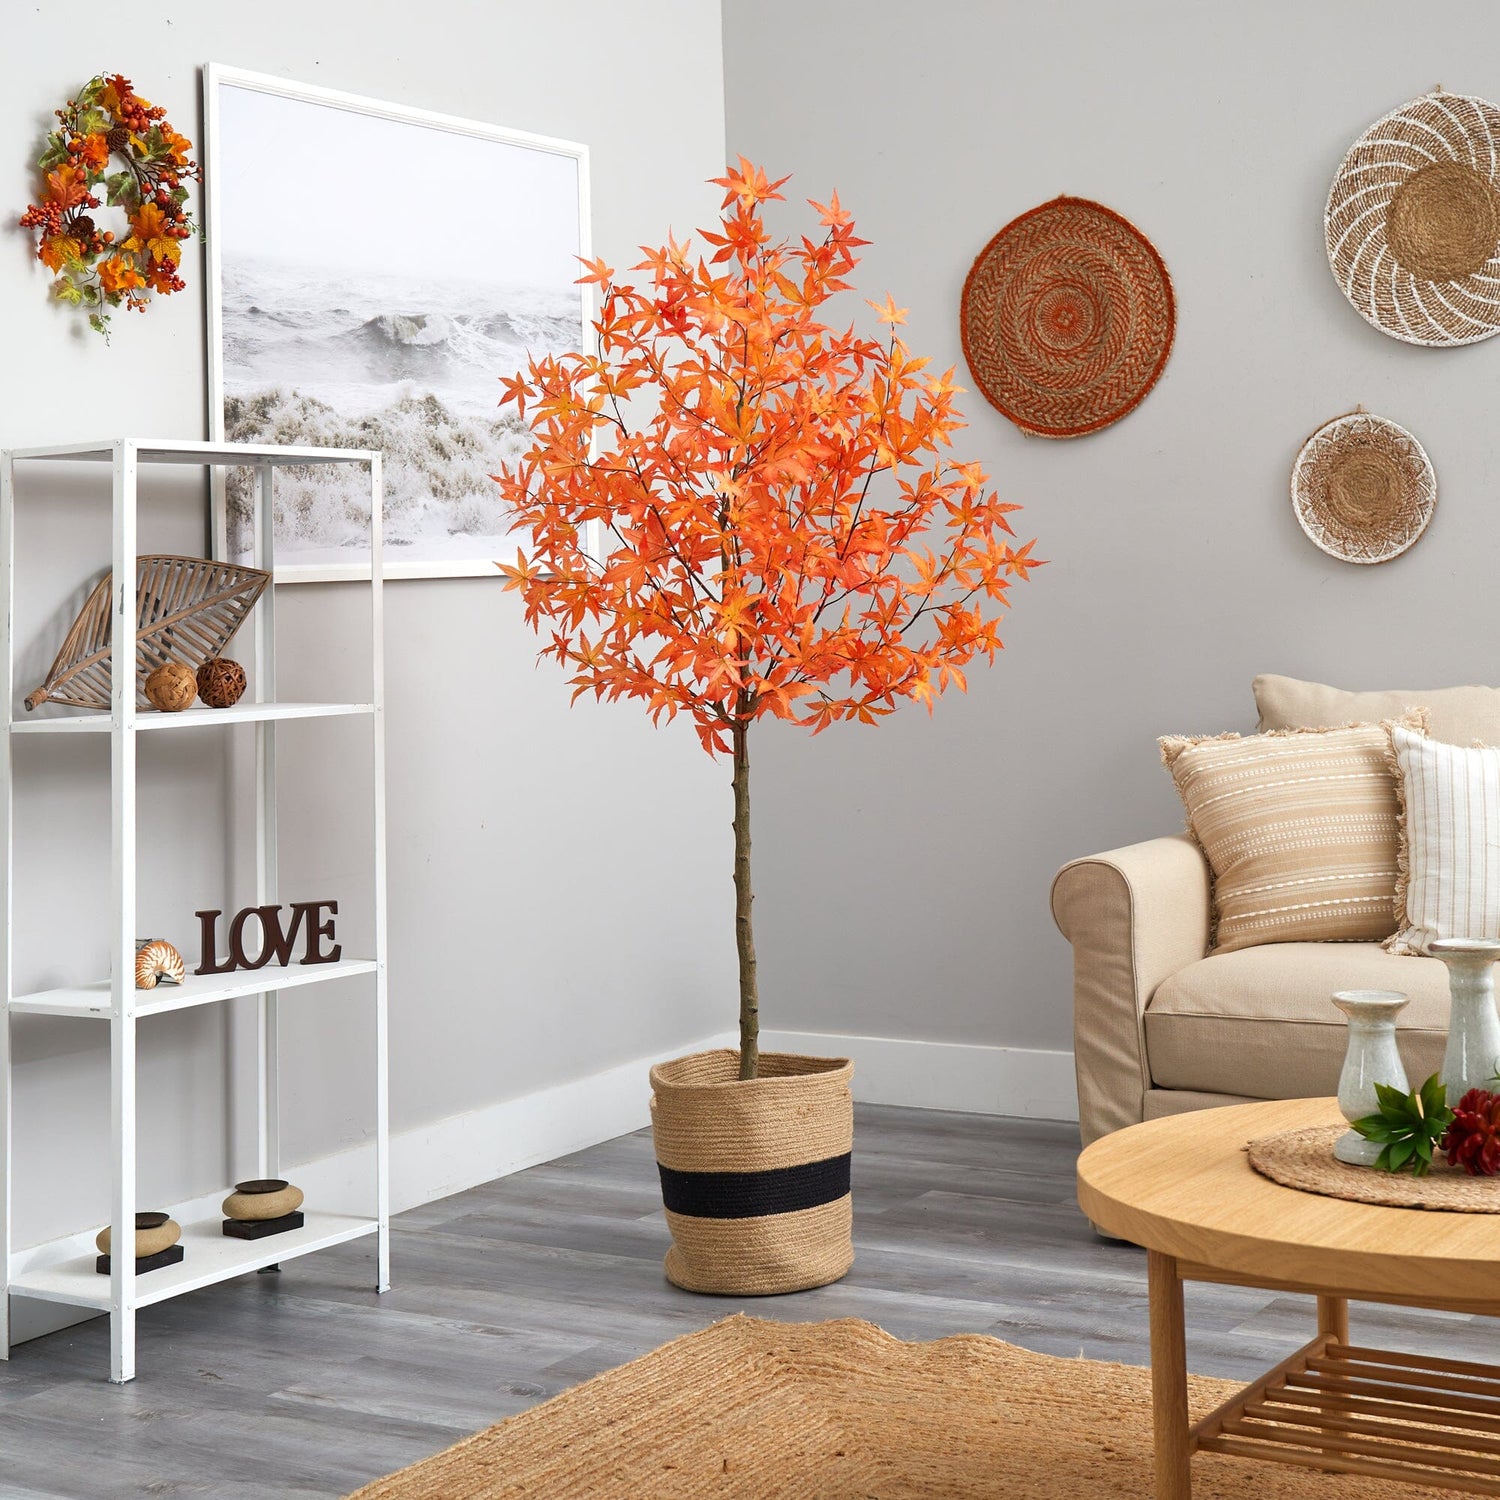 6' Artificial Autumn Maple Tree with Handmade Jute & Cotton Basket